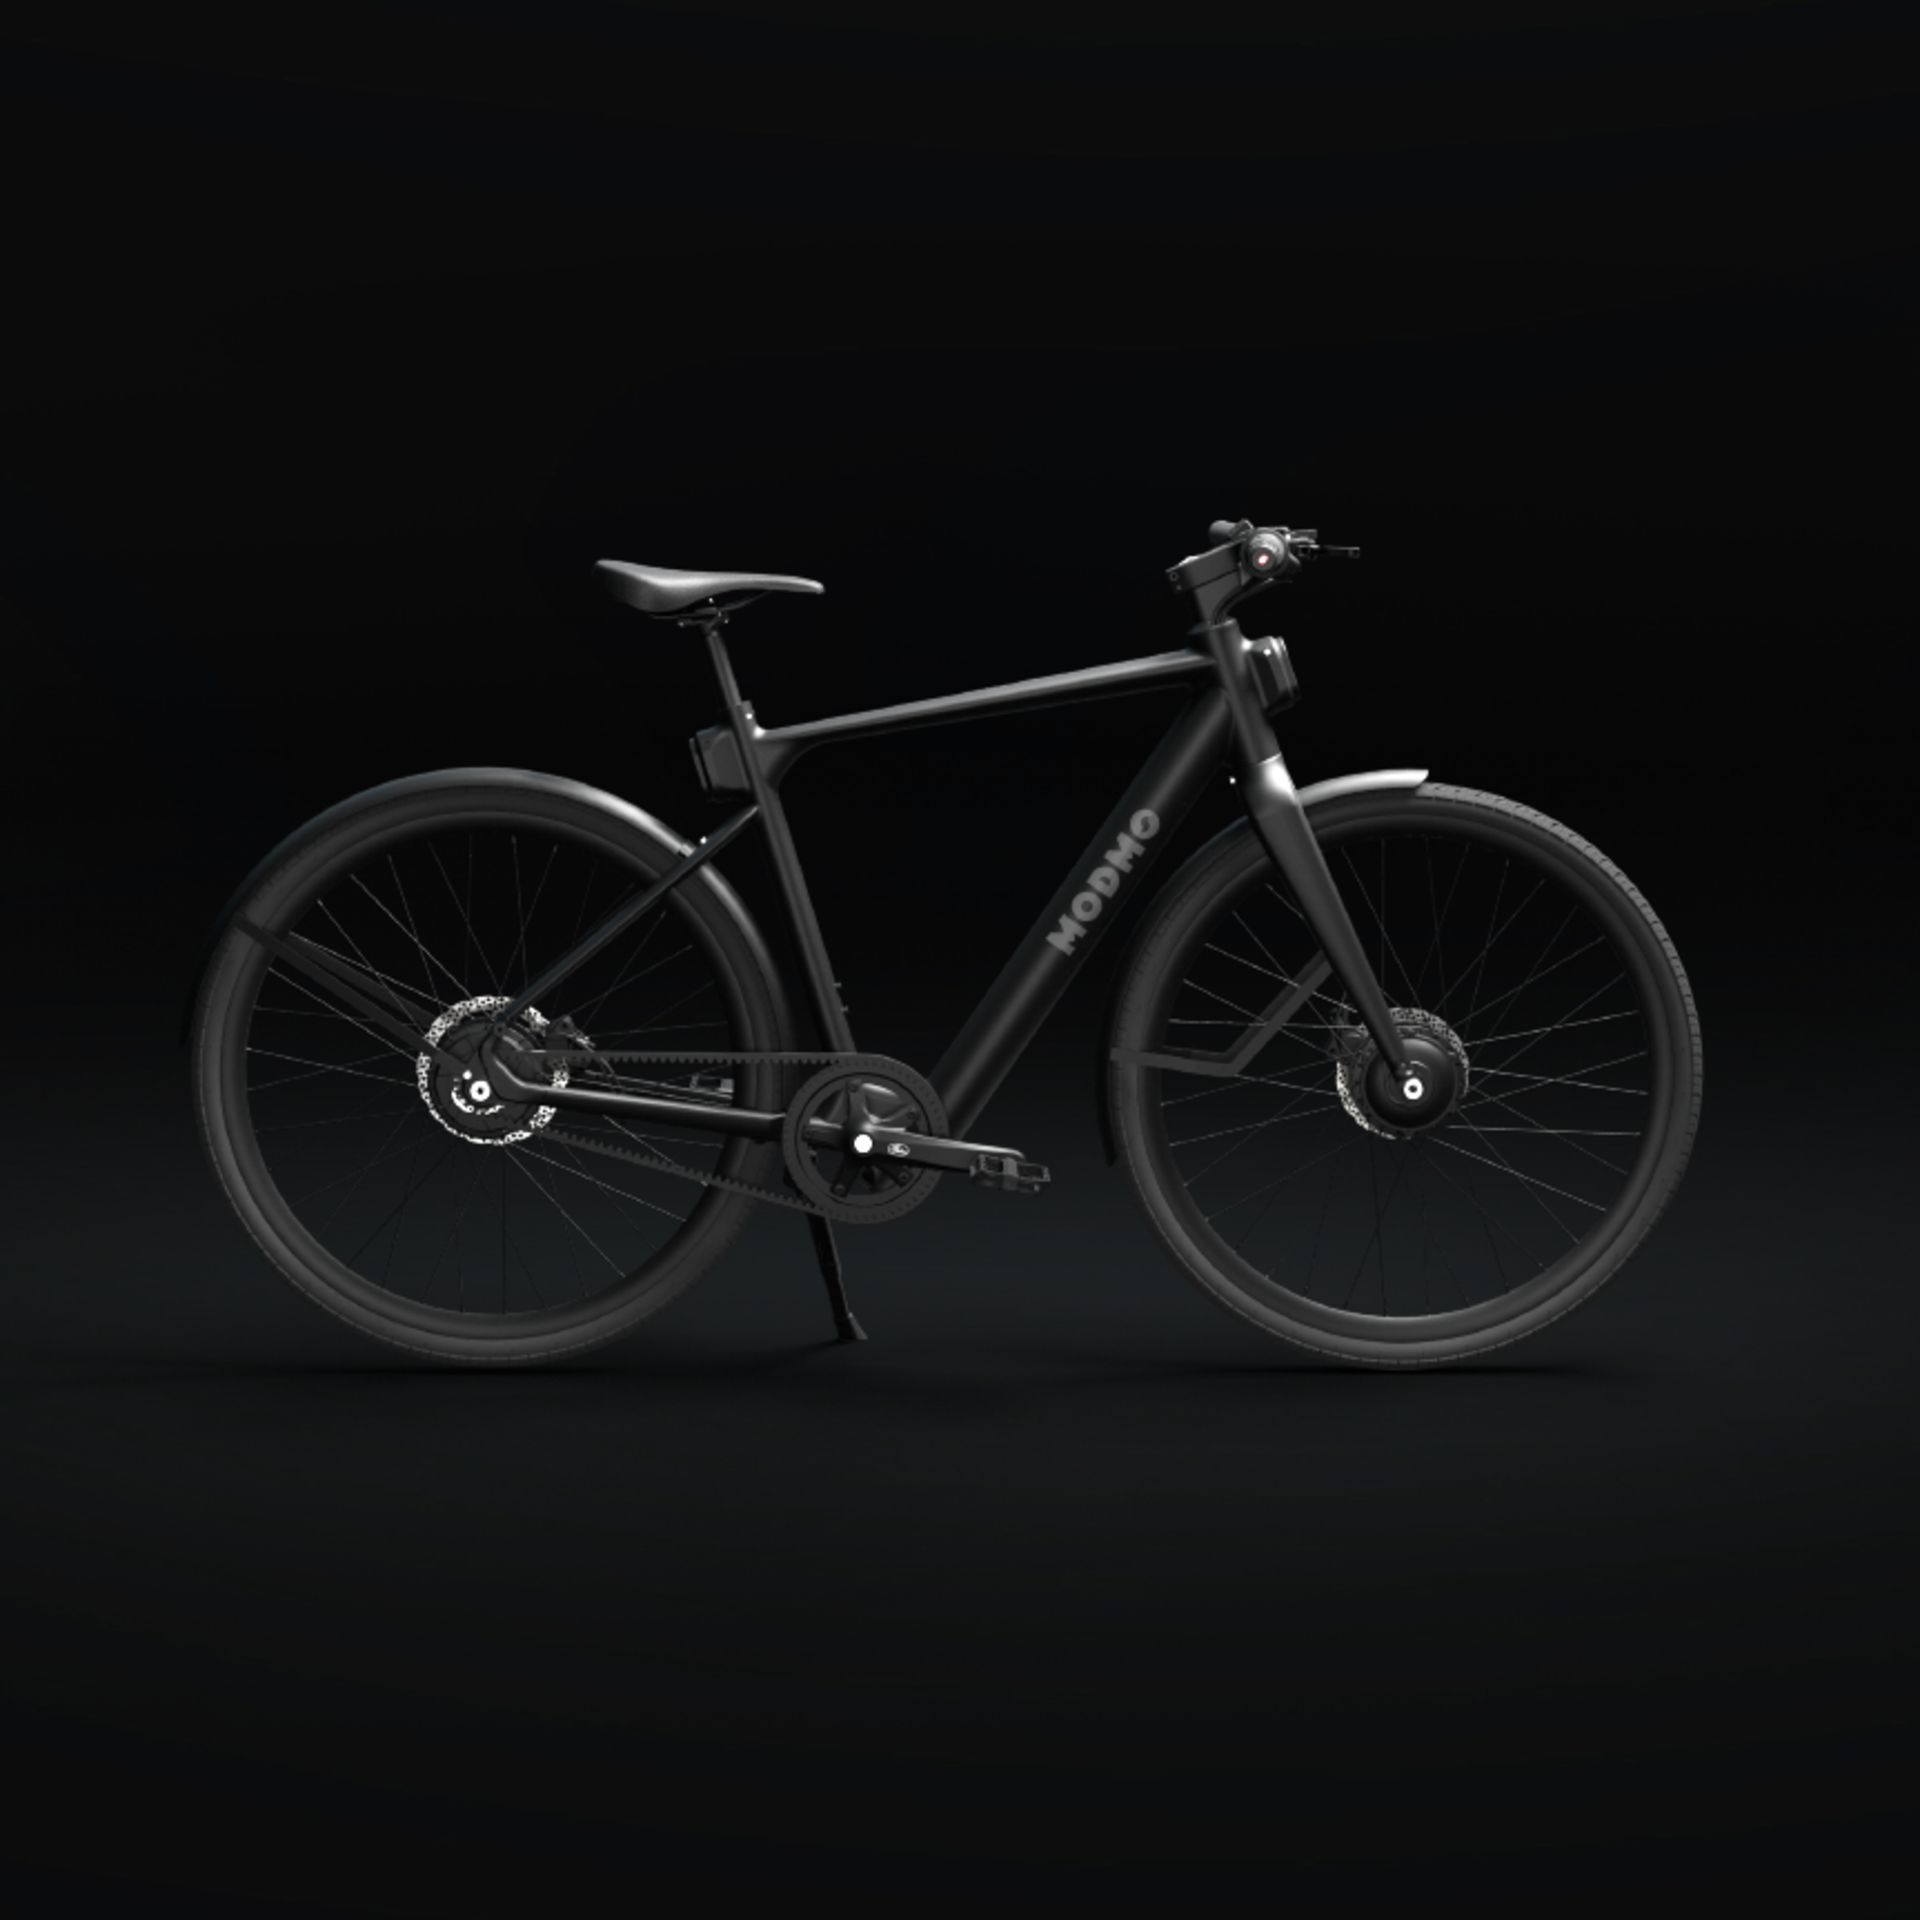 Modmo Saigon+ Electric Bicycle - RRP £2800 - Size M (Rider: 155-175cm) - Image 4 of 15